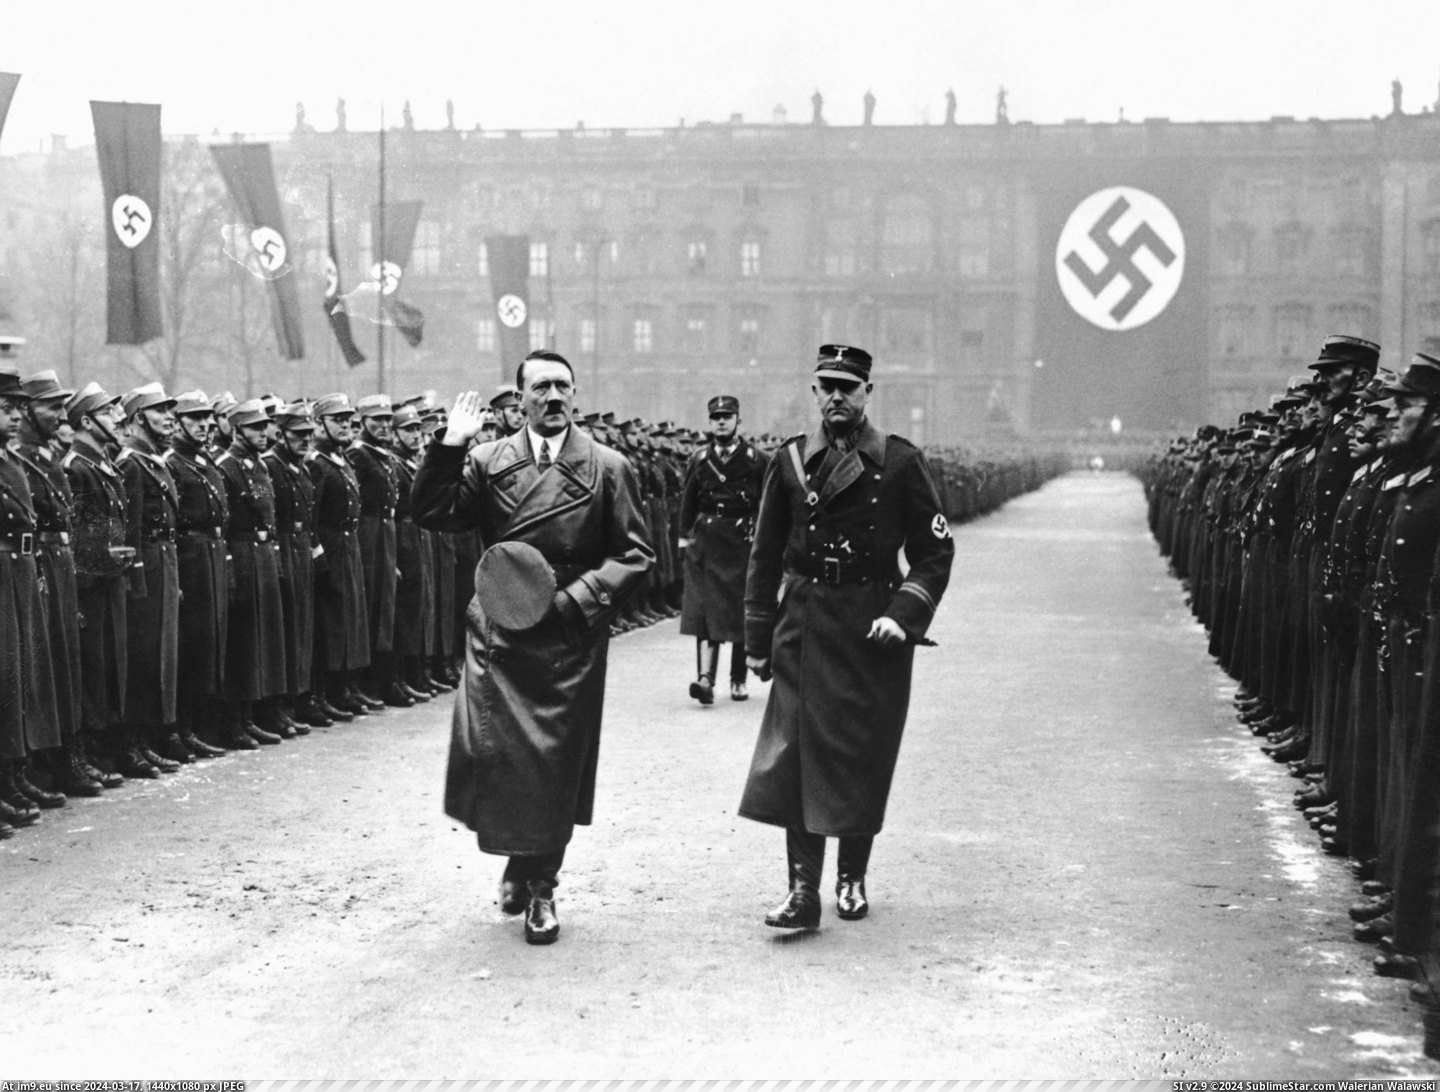 #3rd #History #Reich #Salute #German #Hitler Hitler's Salute (3rd Reich, German history) Pic. (Изображение из альбом Rehost))